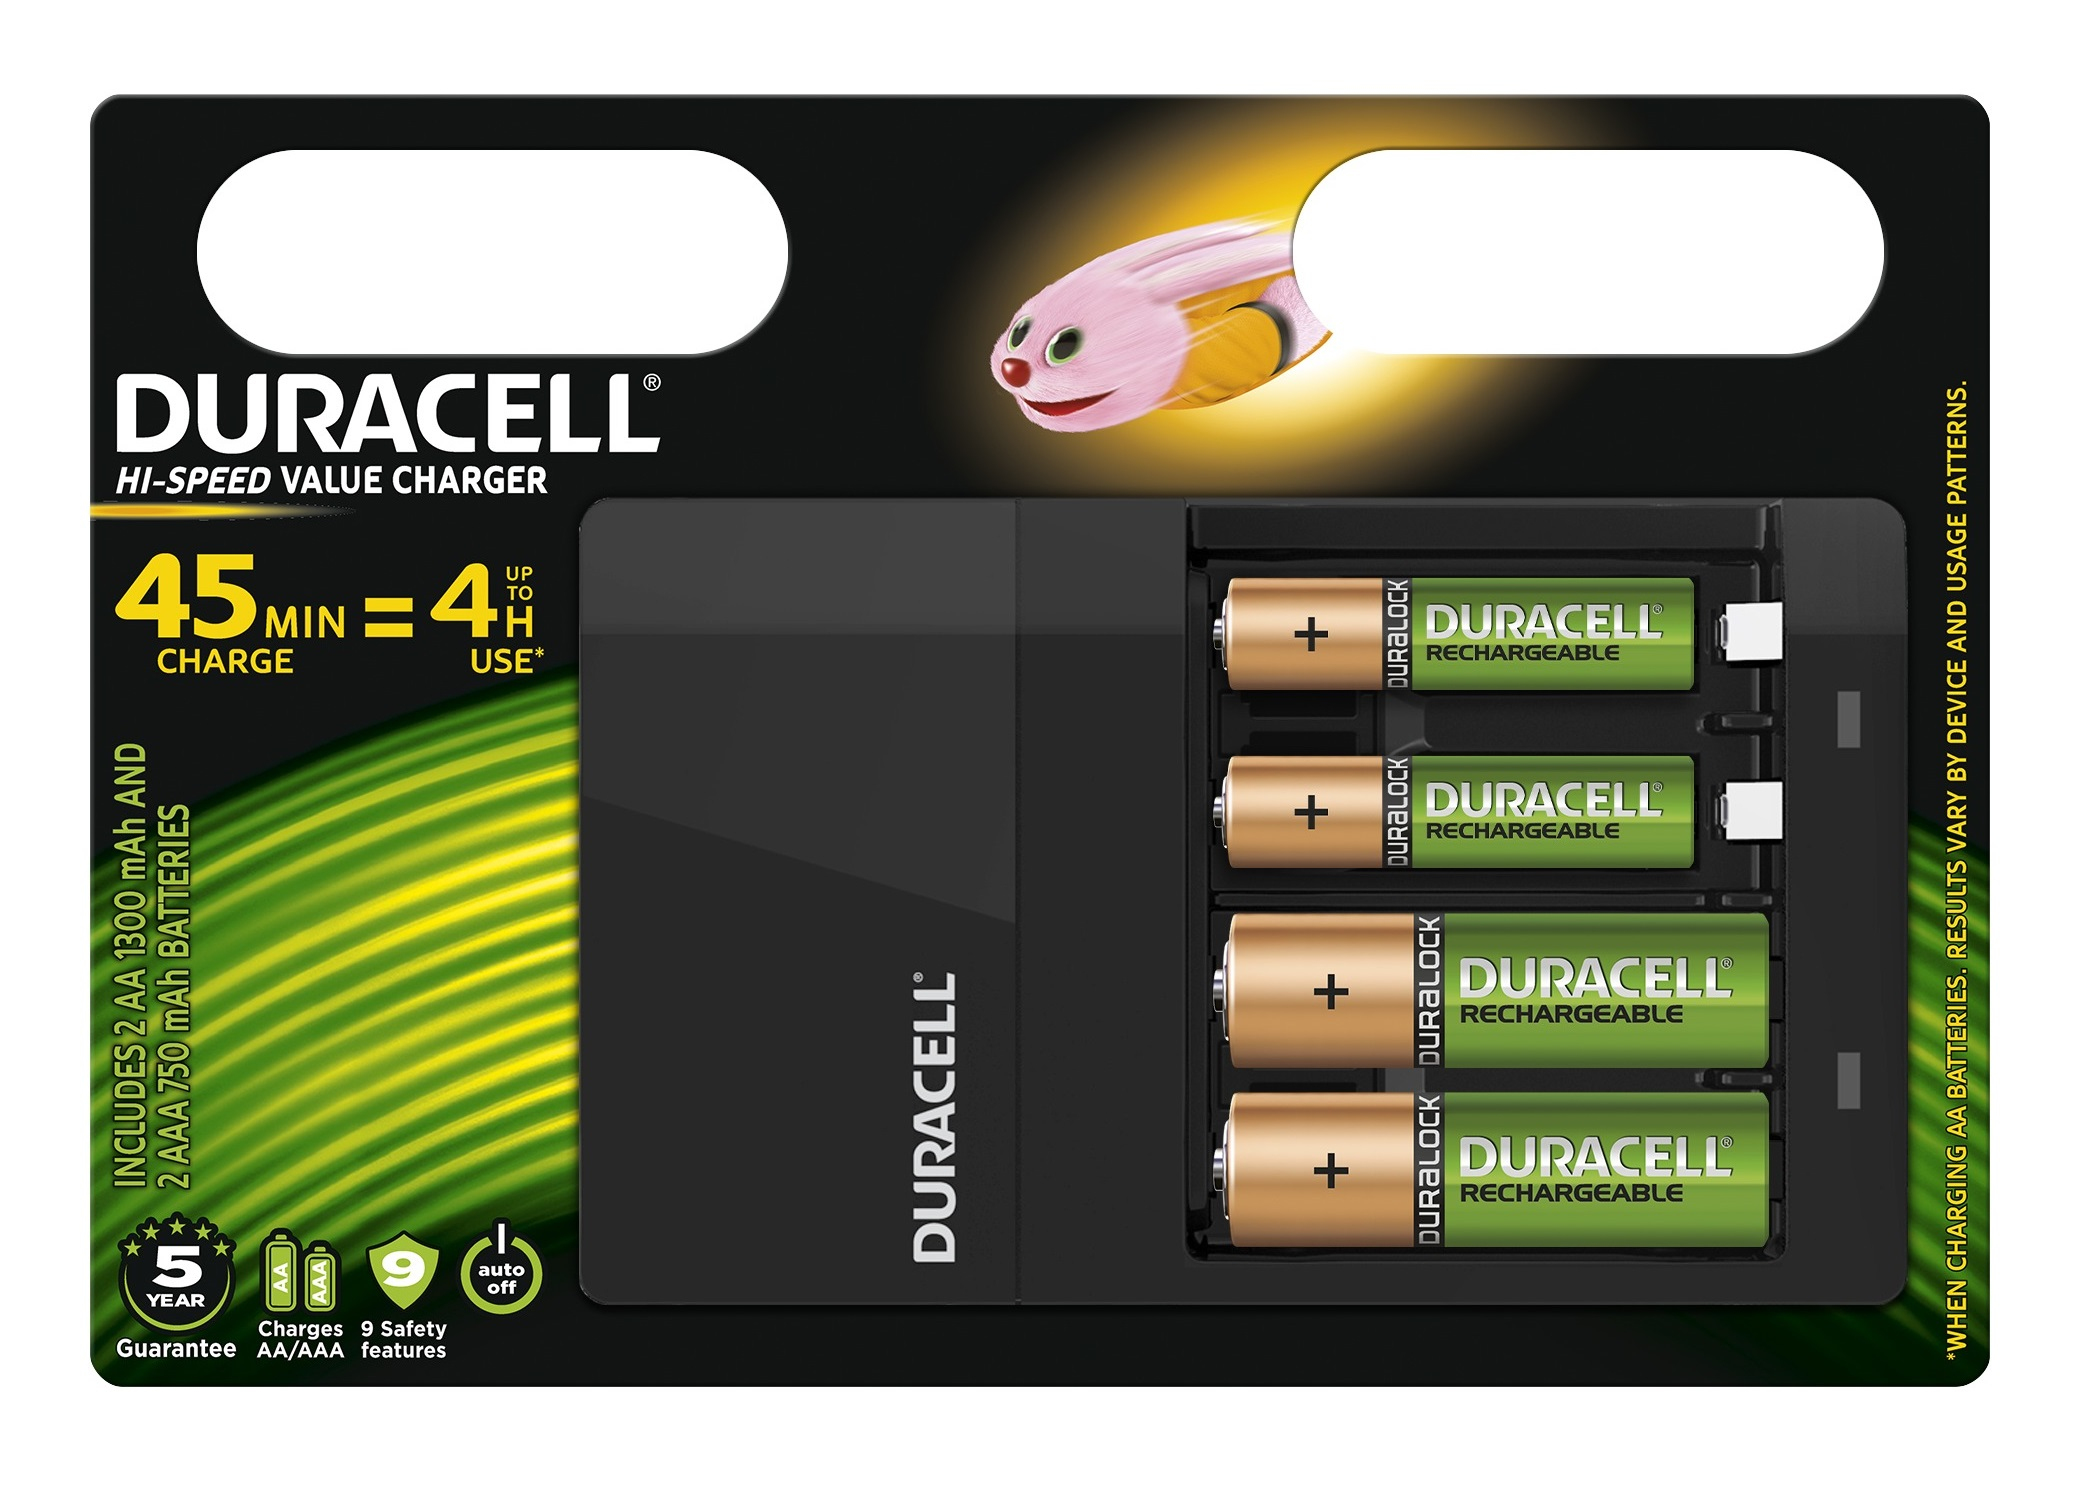 Duracell 4 uur batterijlader, 1 tel